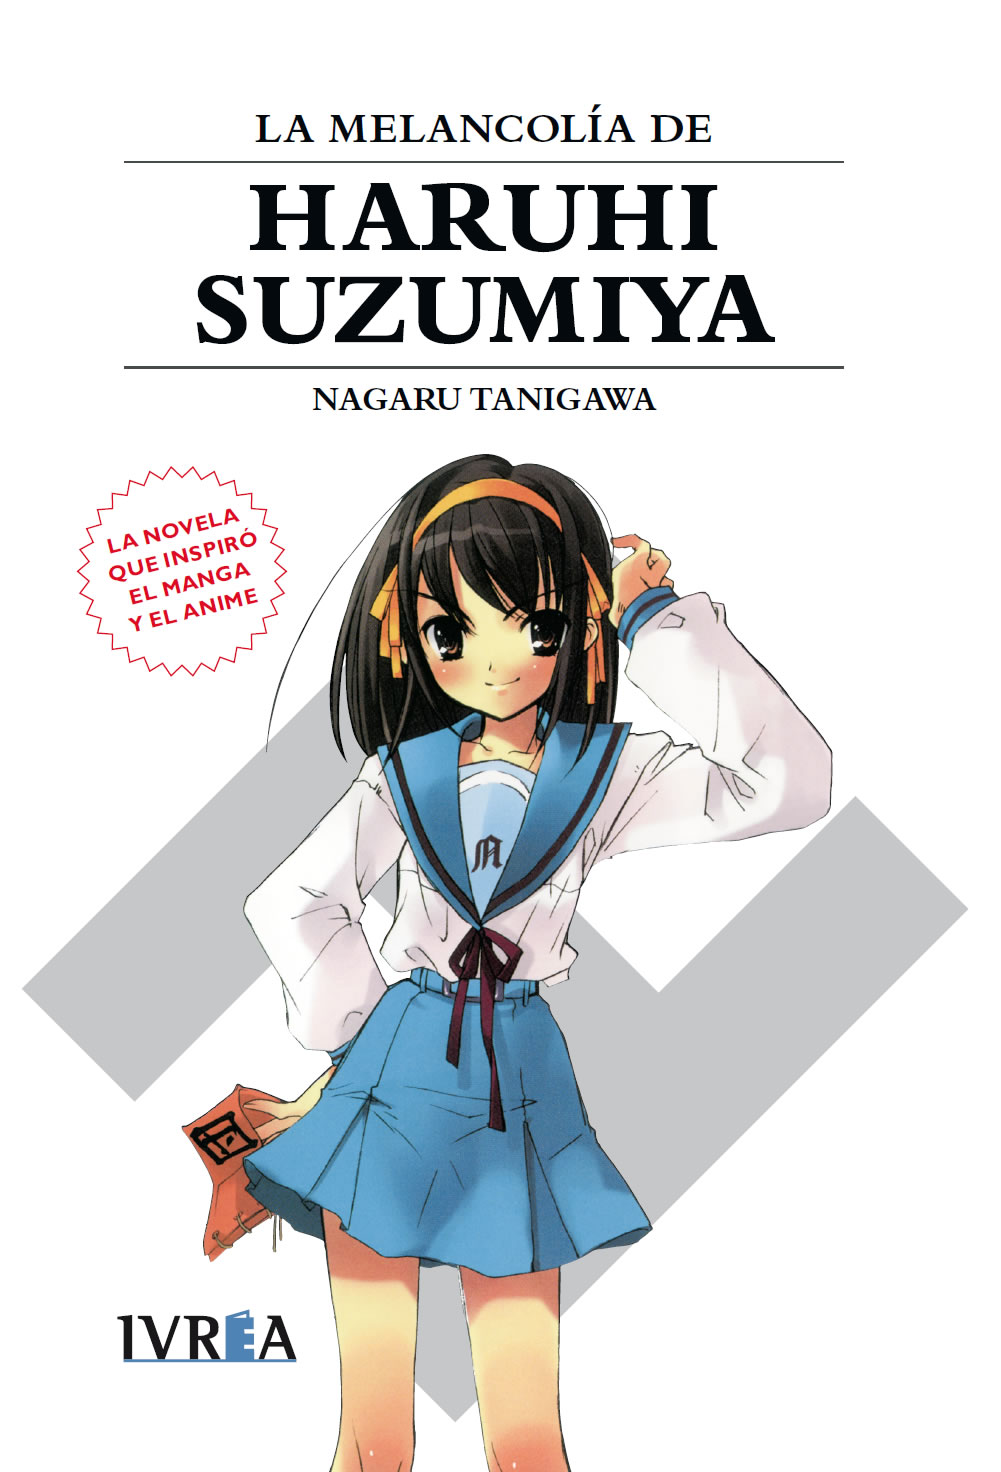 Haruhi Suzumiya historia de las novelas ligeras